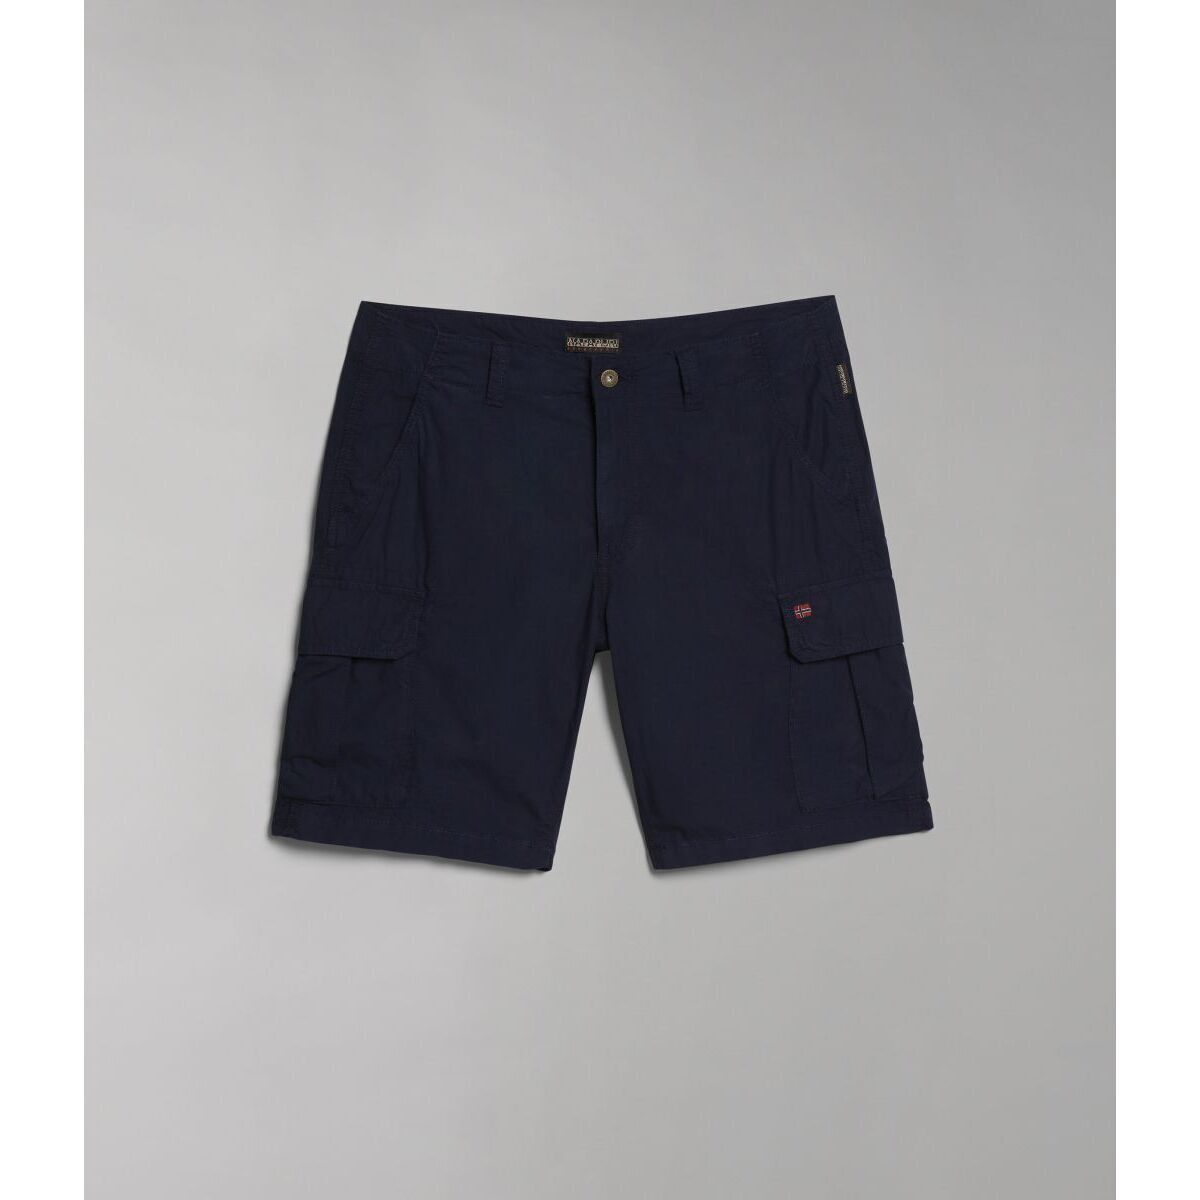 Textil Homem Shorts / Bermudas Napapijri NOTO 5 NP0A4GAM-176 BLU MARINE Azul